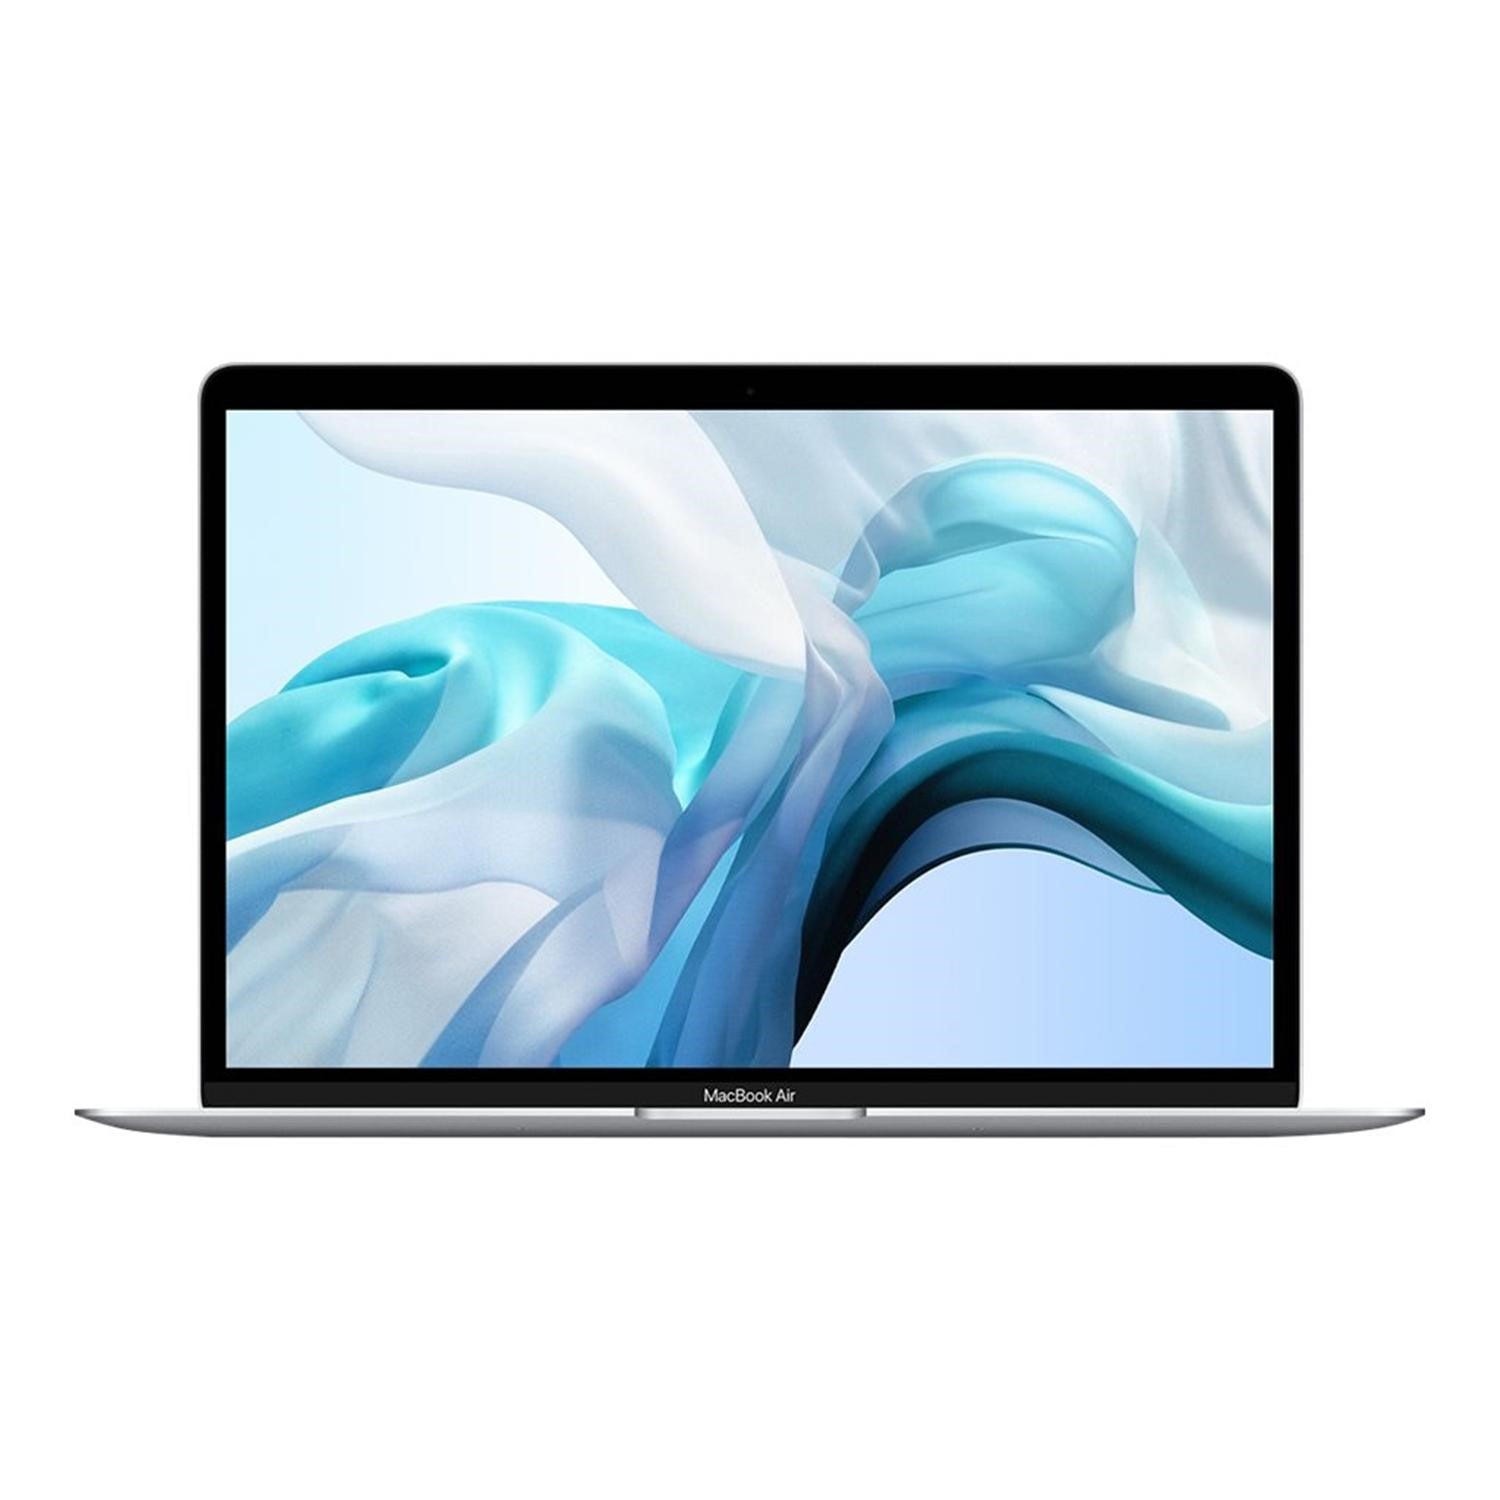 Apple MacBook Air 13.3'' MVFL2B/A (2019) Laptop Intel Core i5 8GB RAM 256GB SSD - Silver - Refurbished Pristine